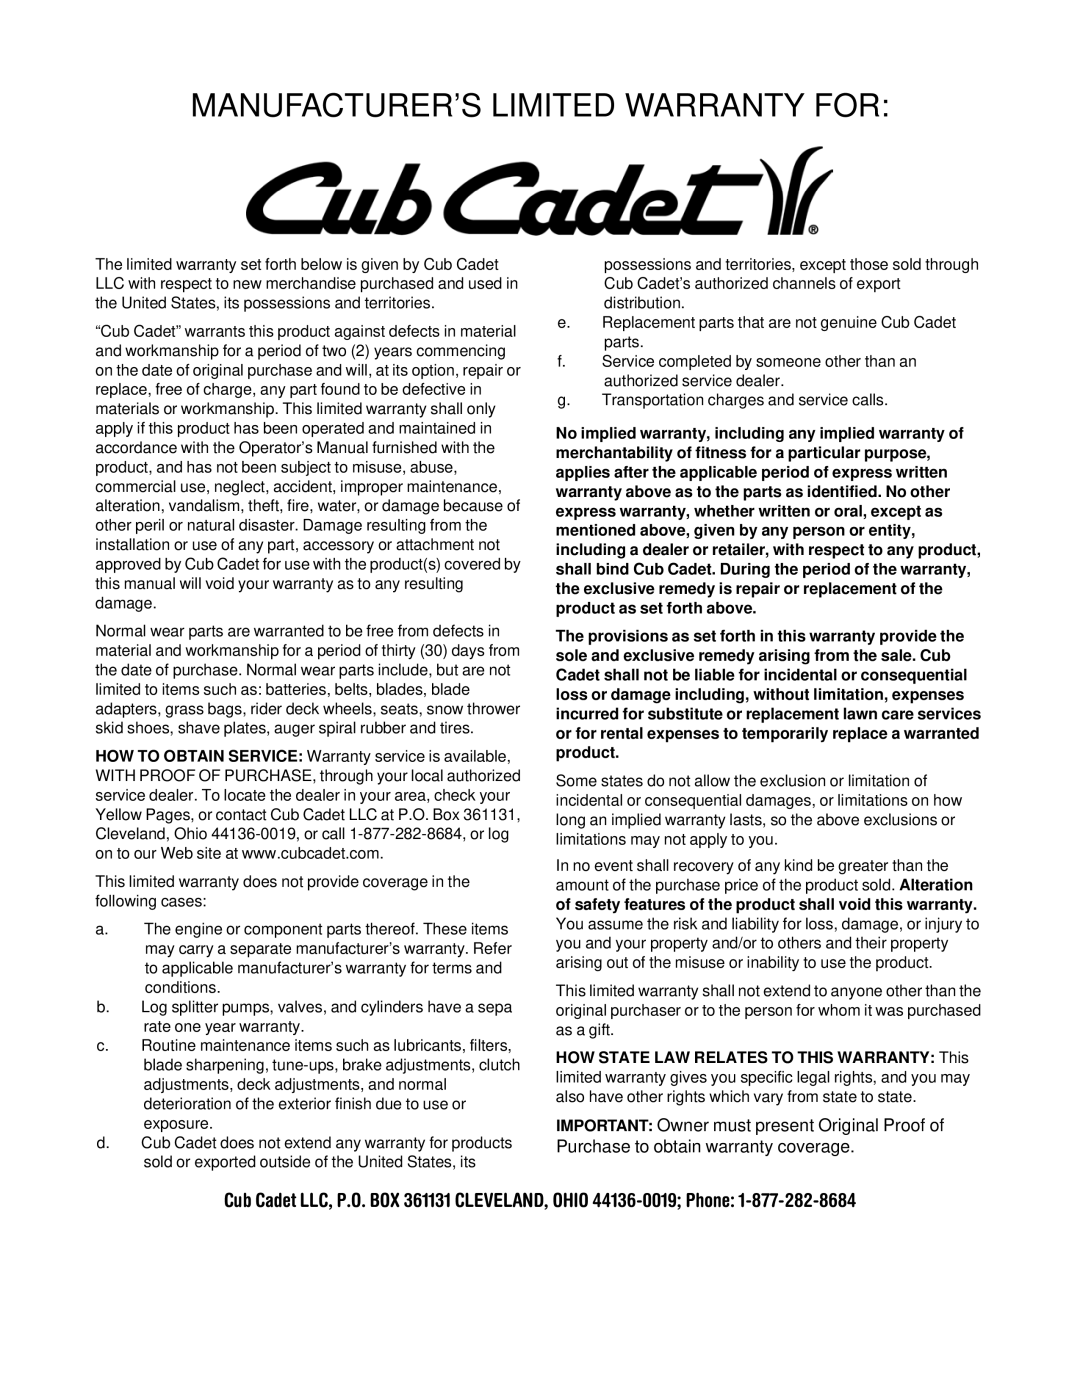 Cub Cadet 454 manual MANUFACTURER’S Limited Warranty for 